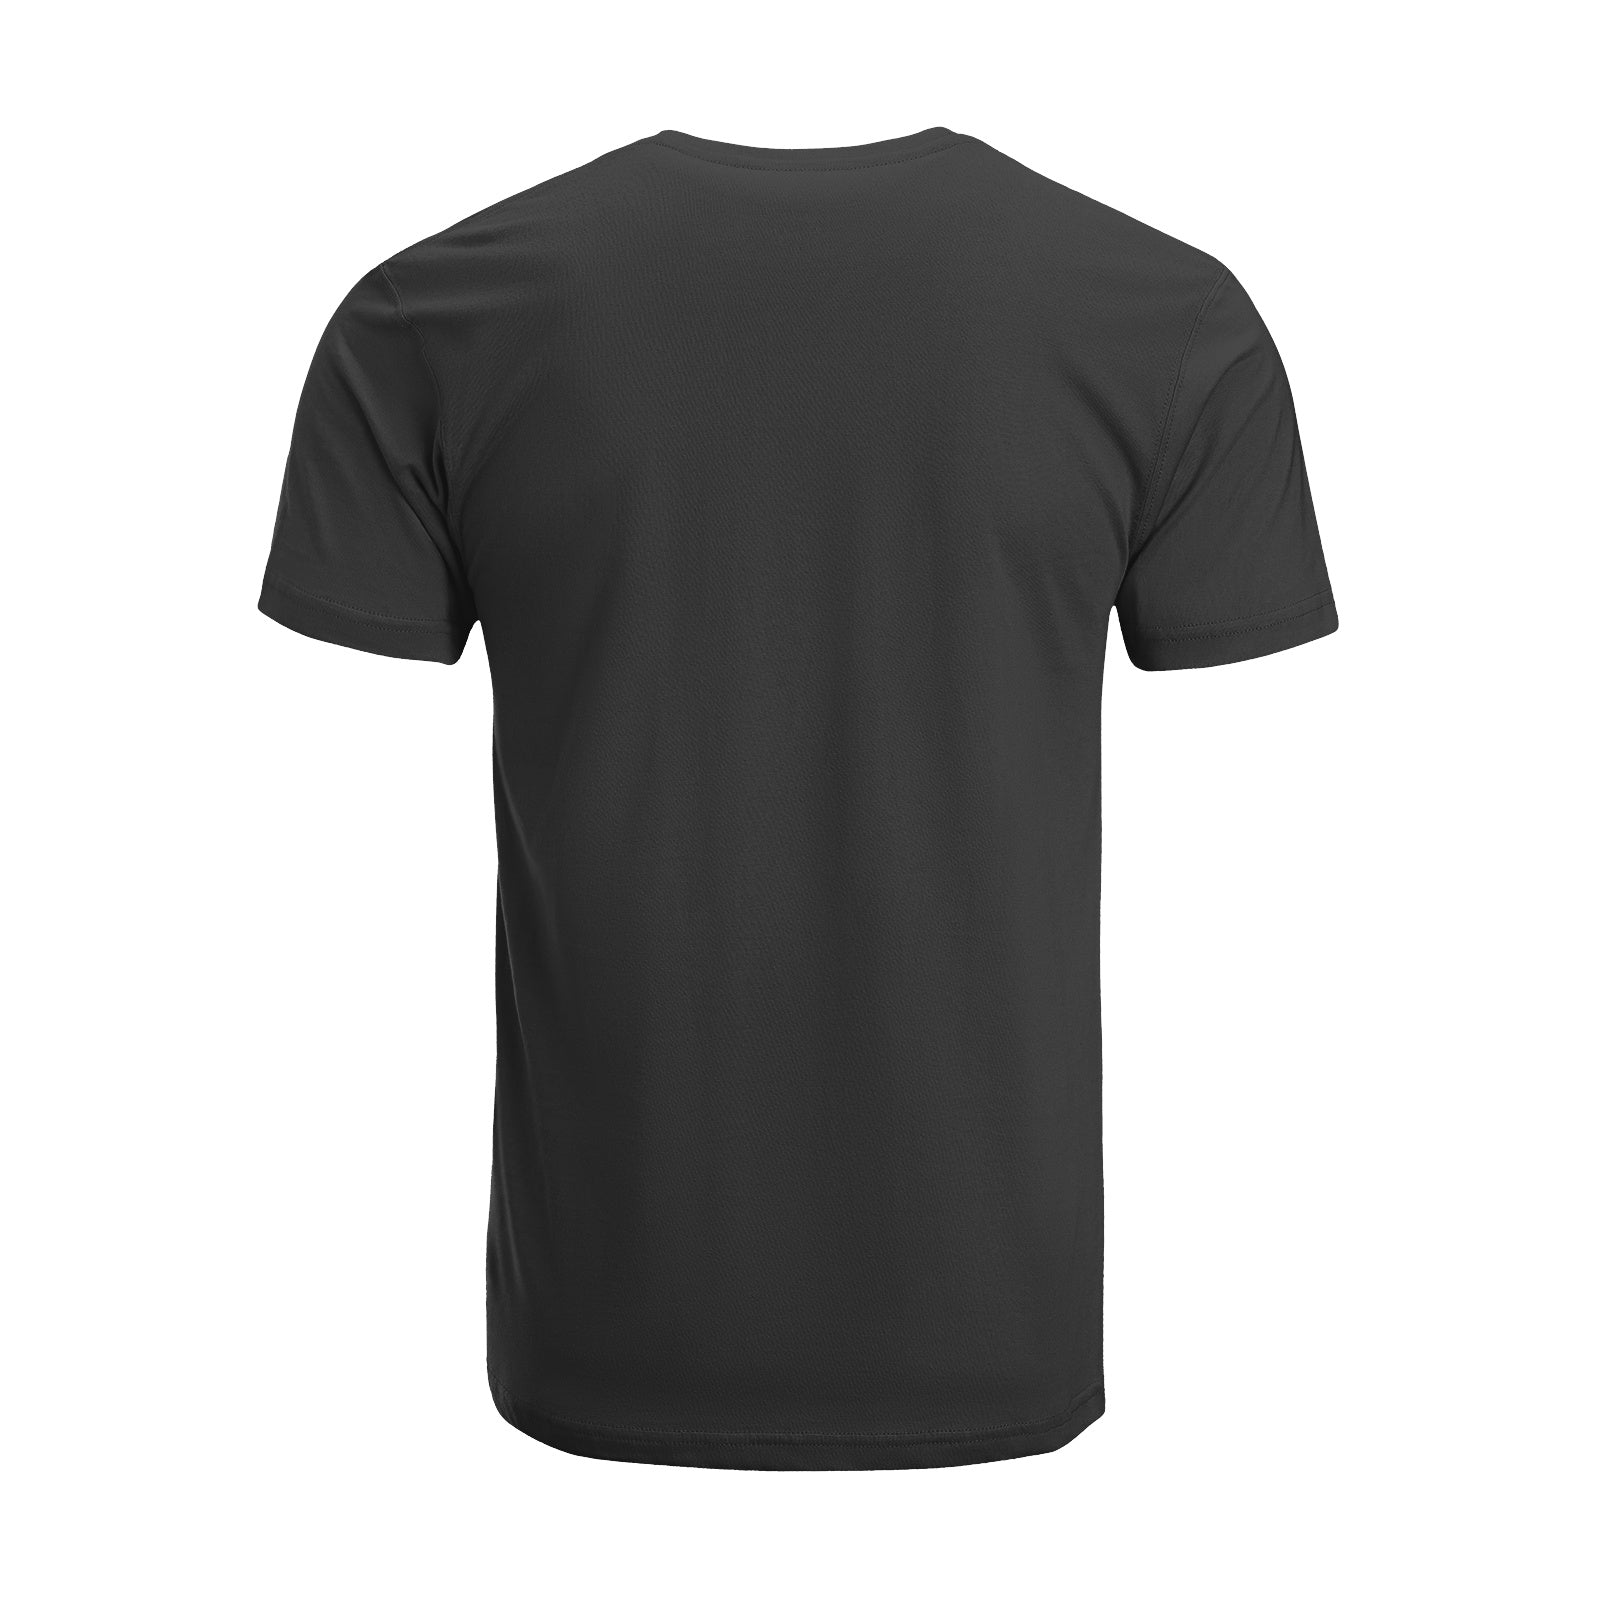 Unisex Short Sleeve Crew Neck Cotton Jersey T-Shirt CAT 30 - Tara-Outfits.com